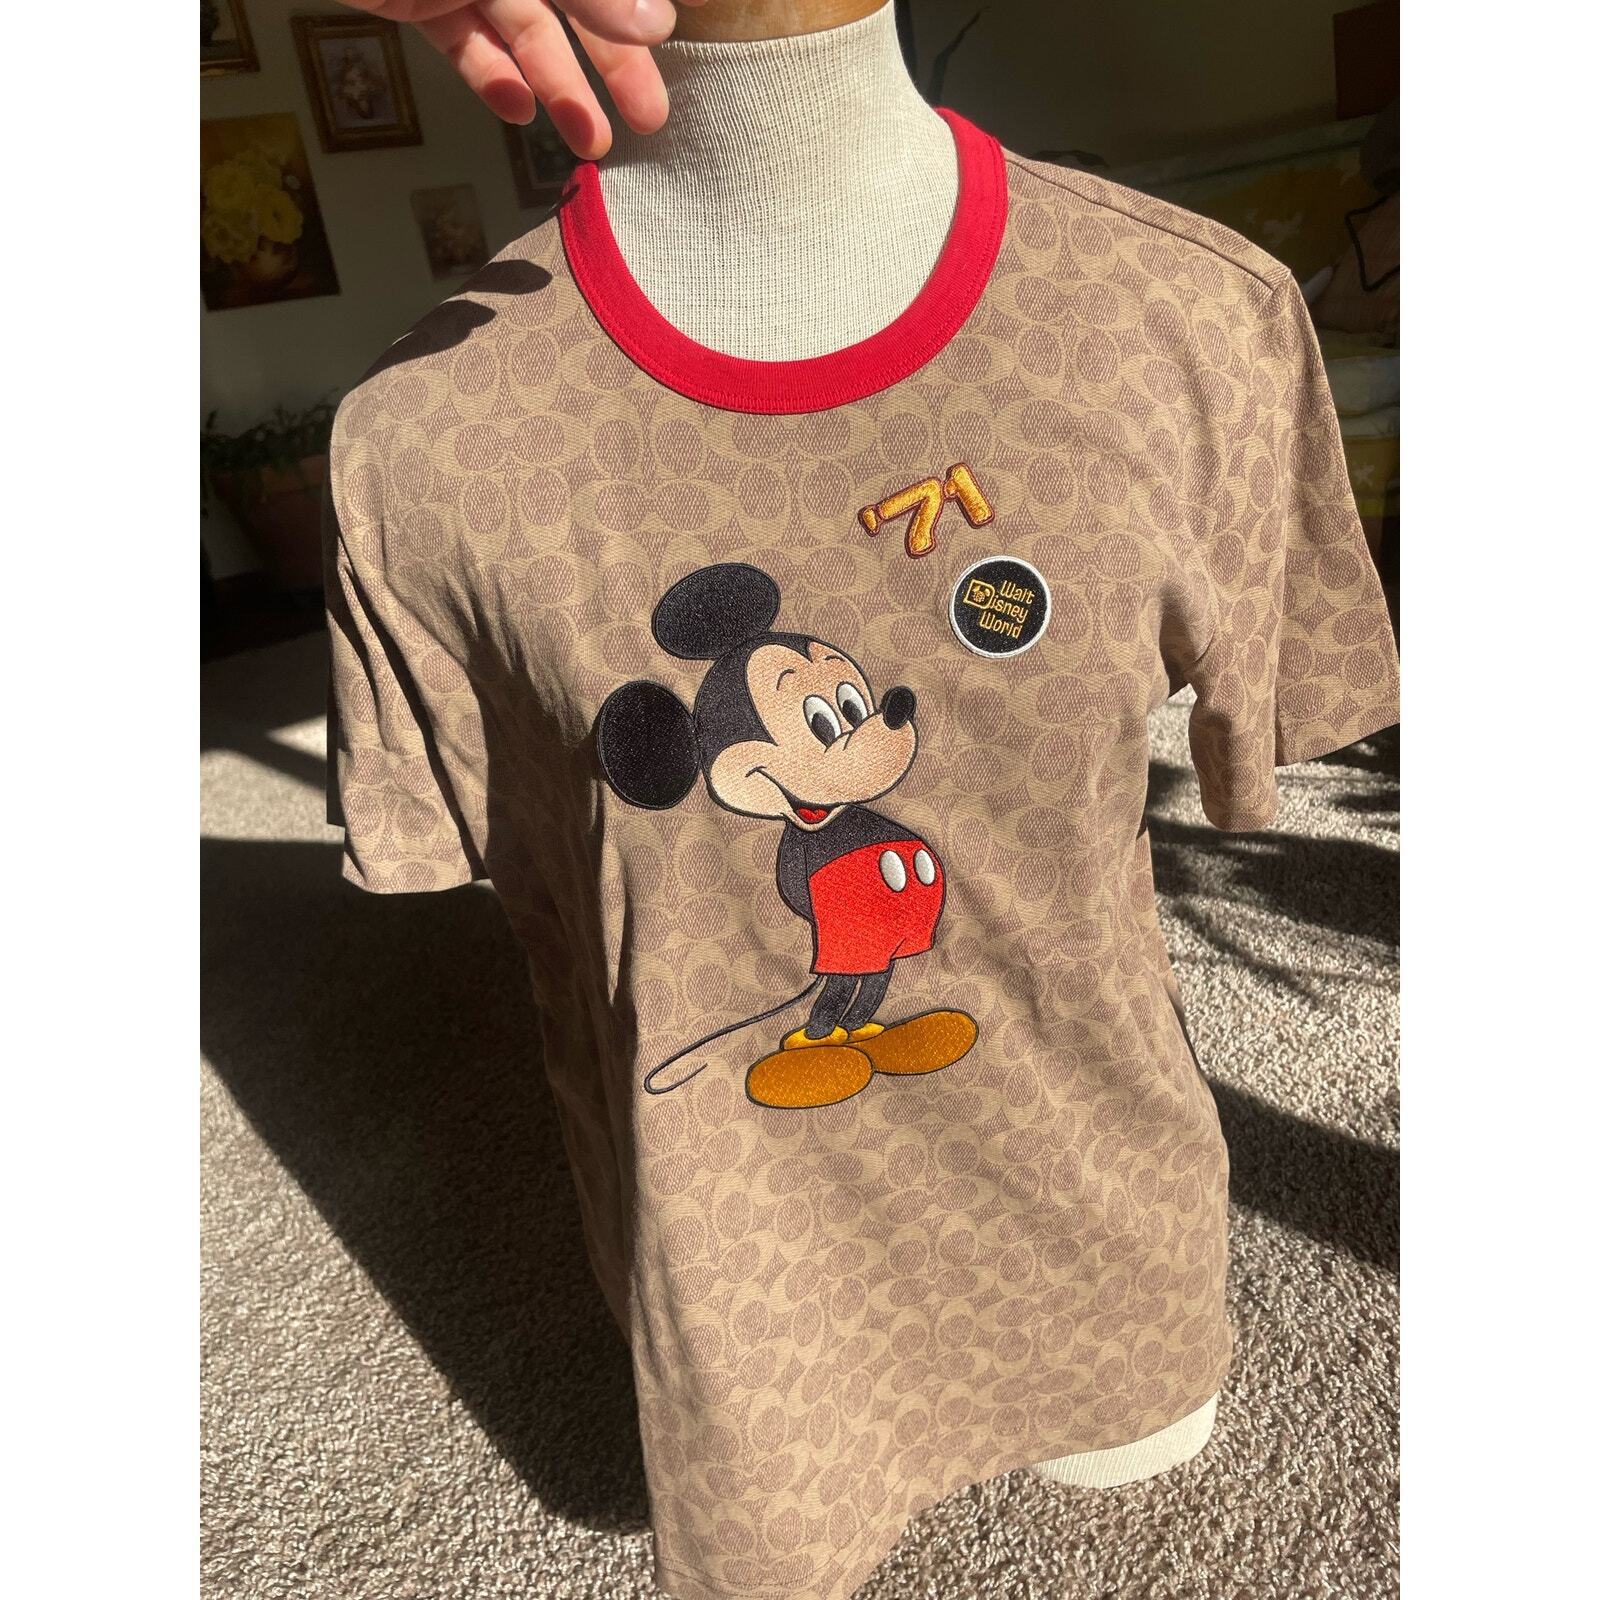 Disney X Coach Mickey Mouse Signature T Shirt size M